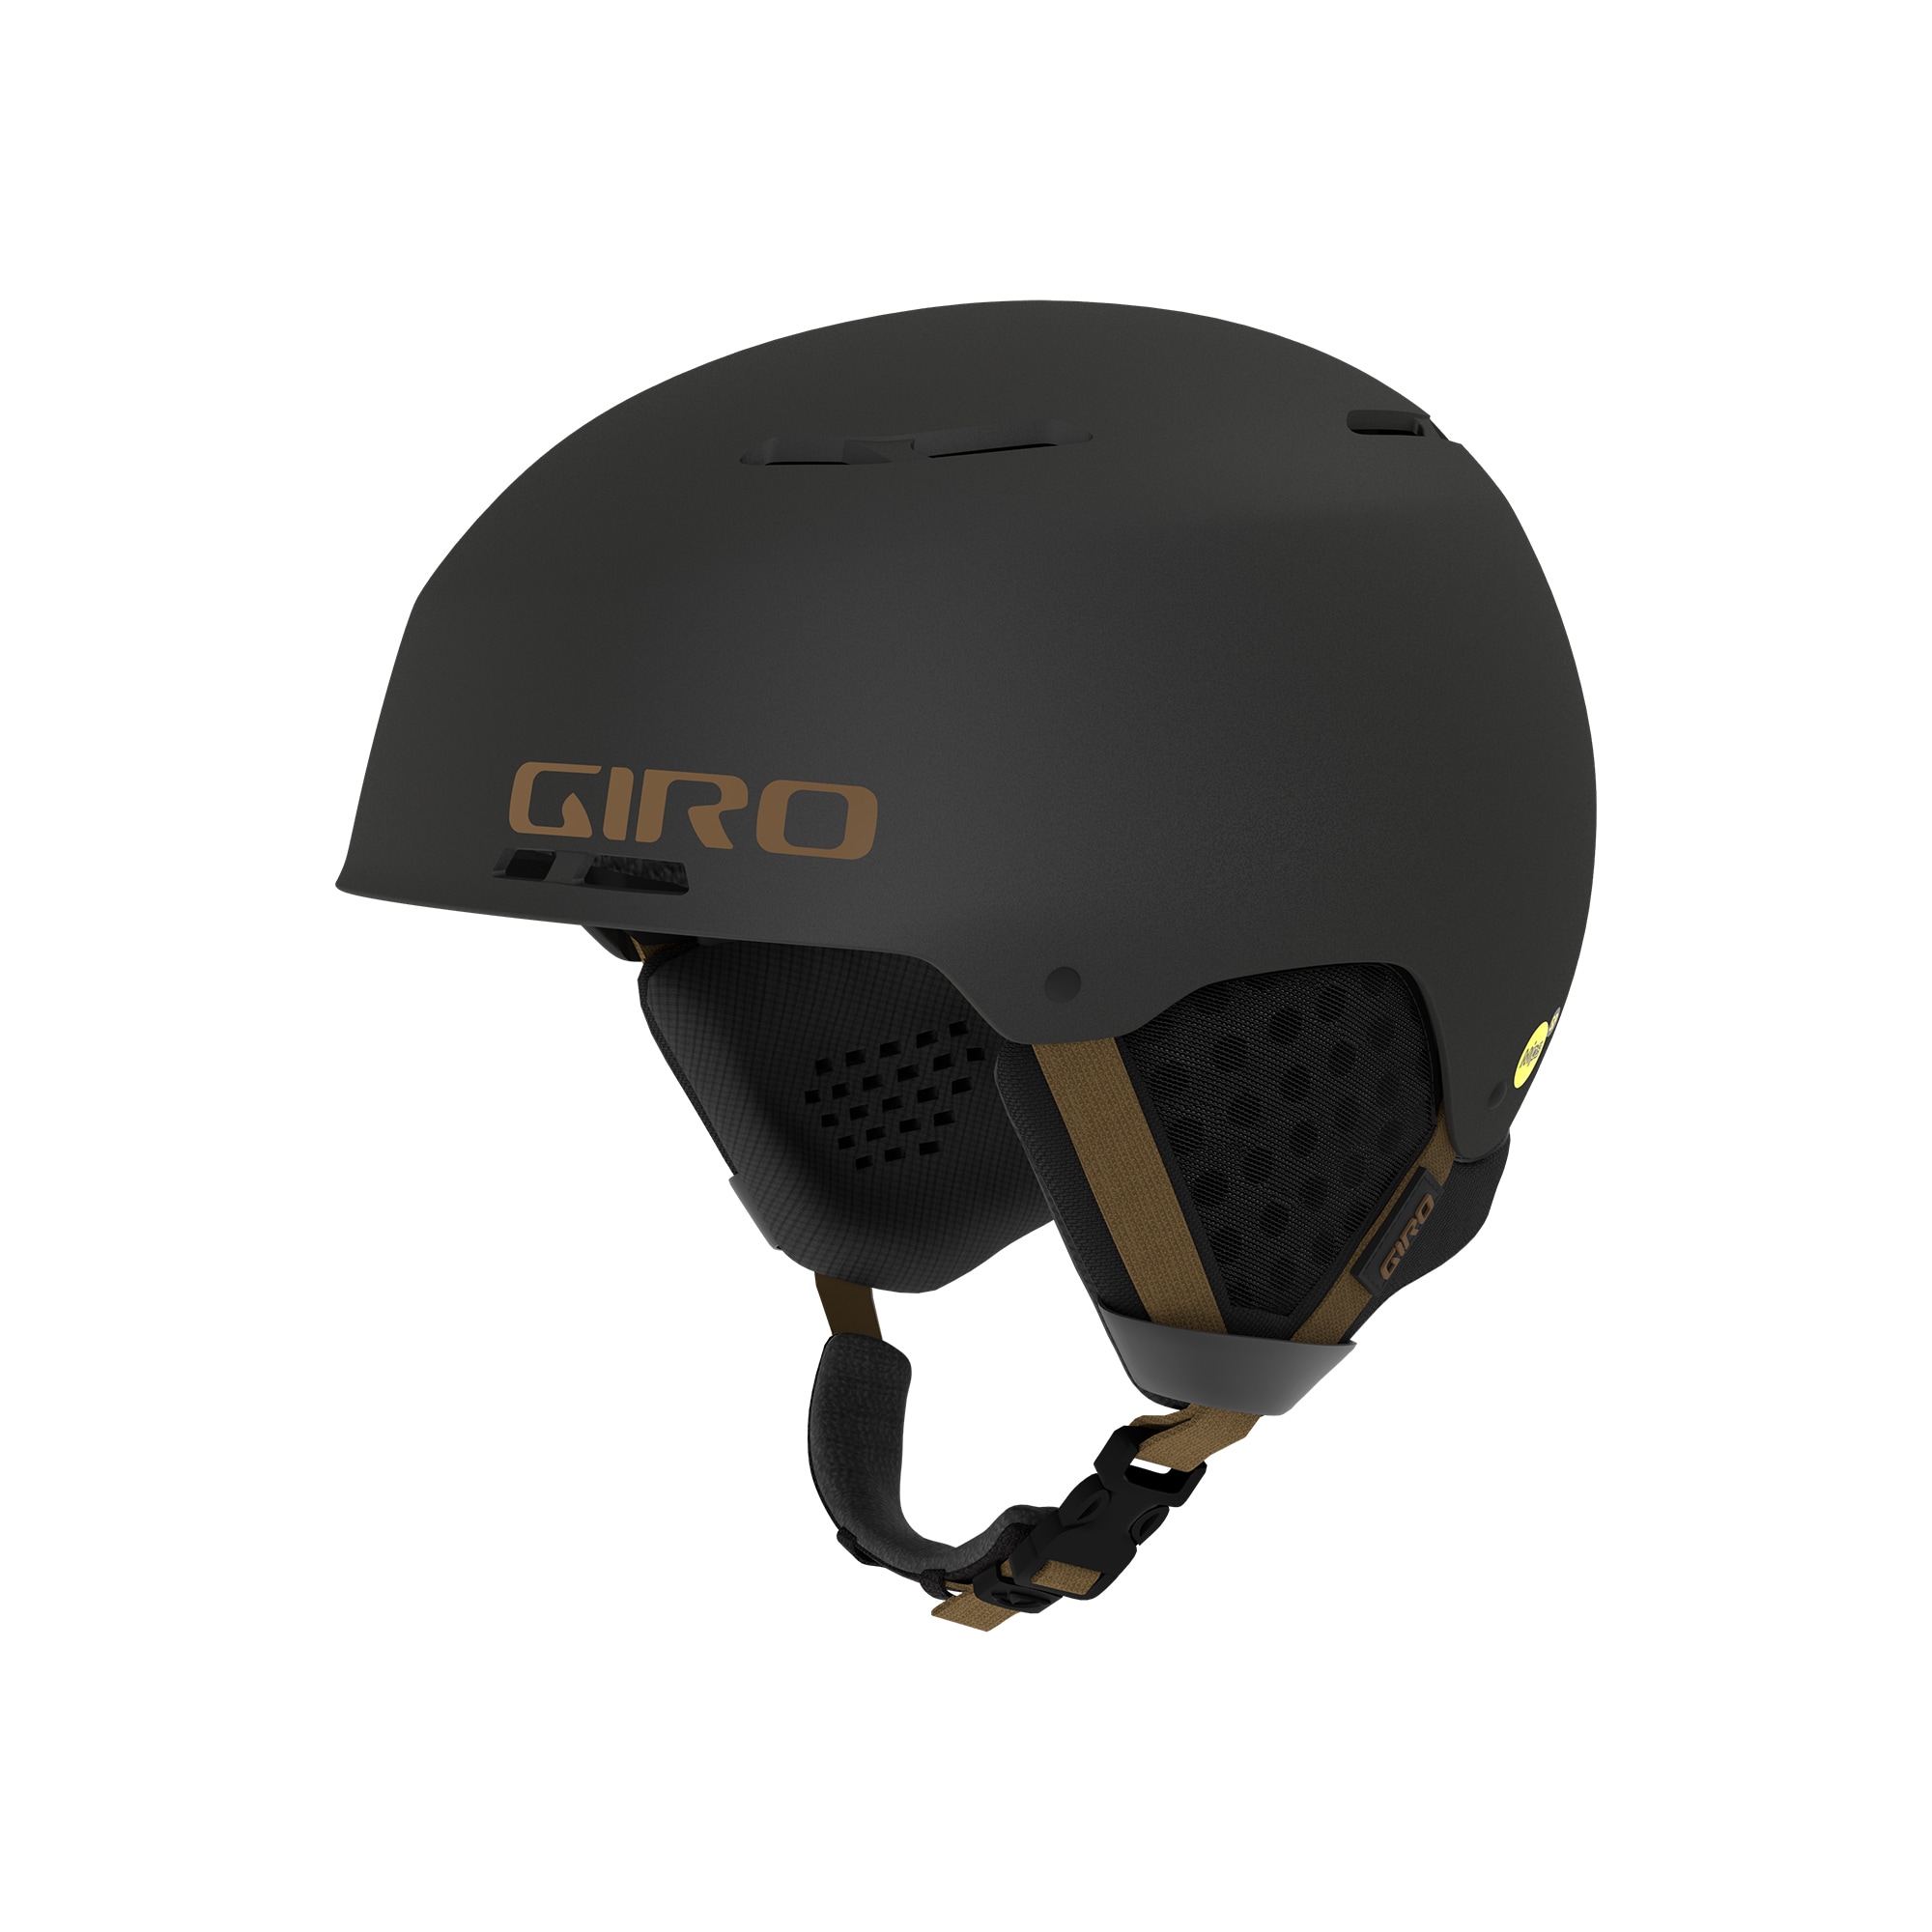 Giro | Stort utbud av skidhjälmar & goggles 2021 | Skistore